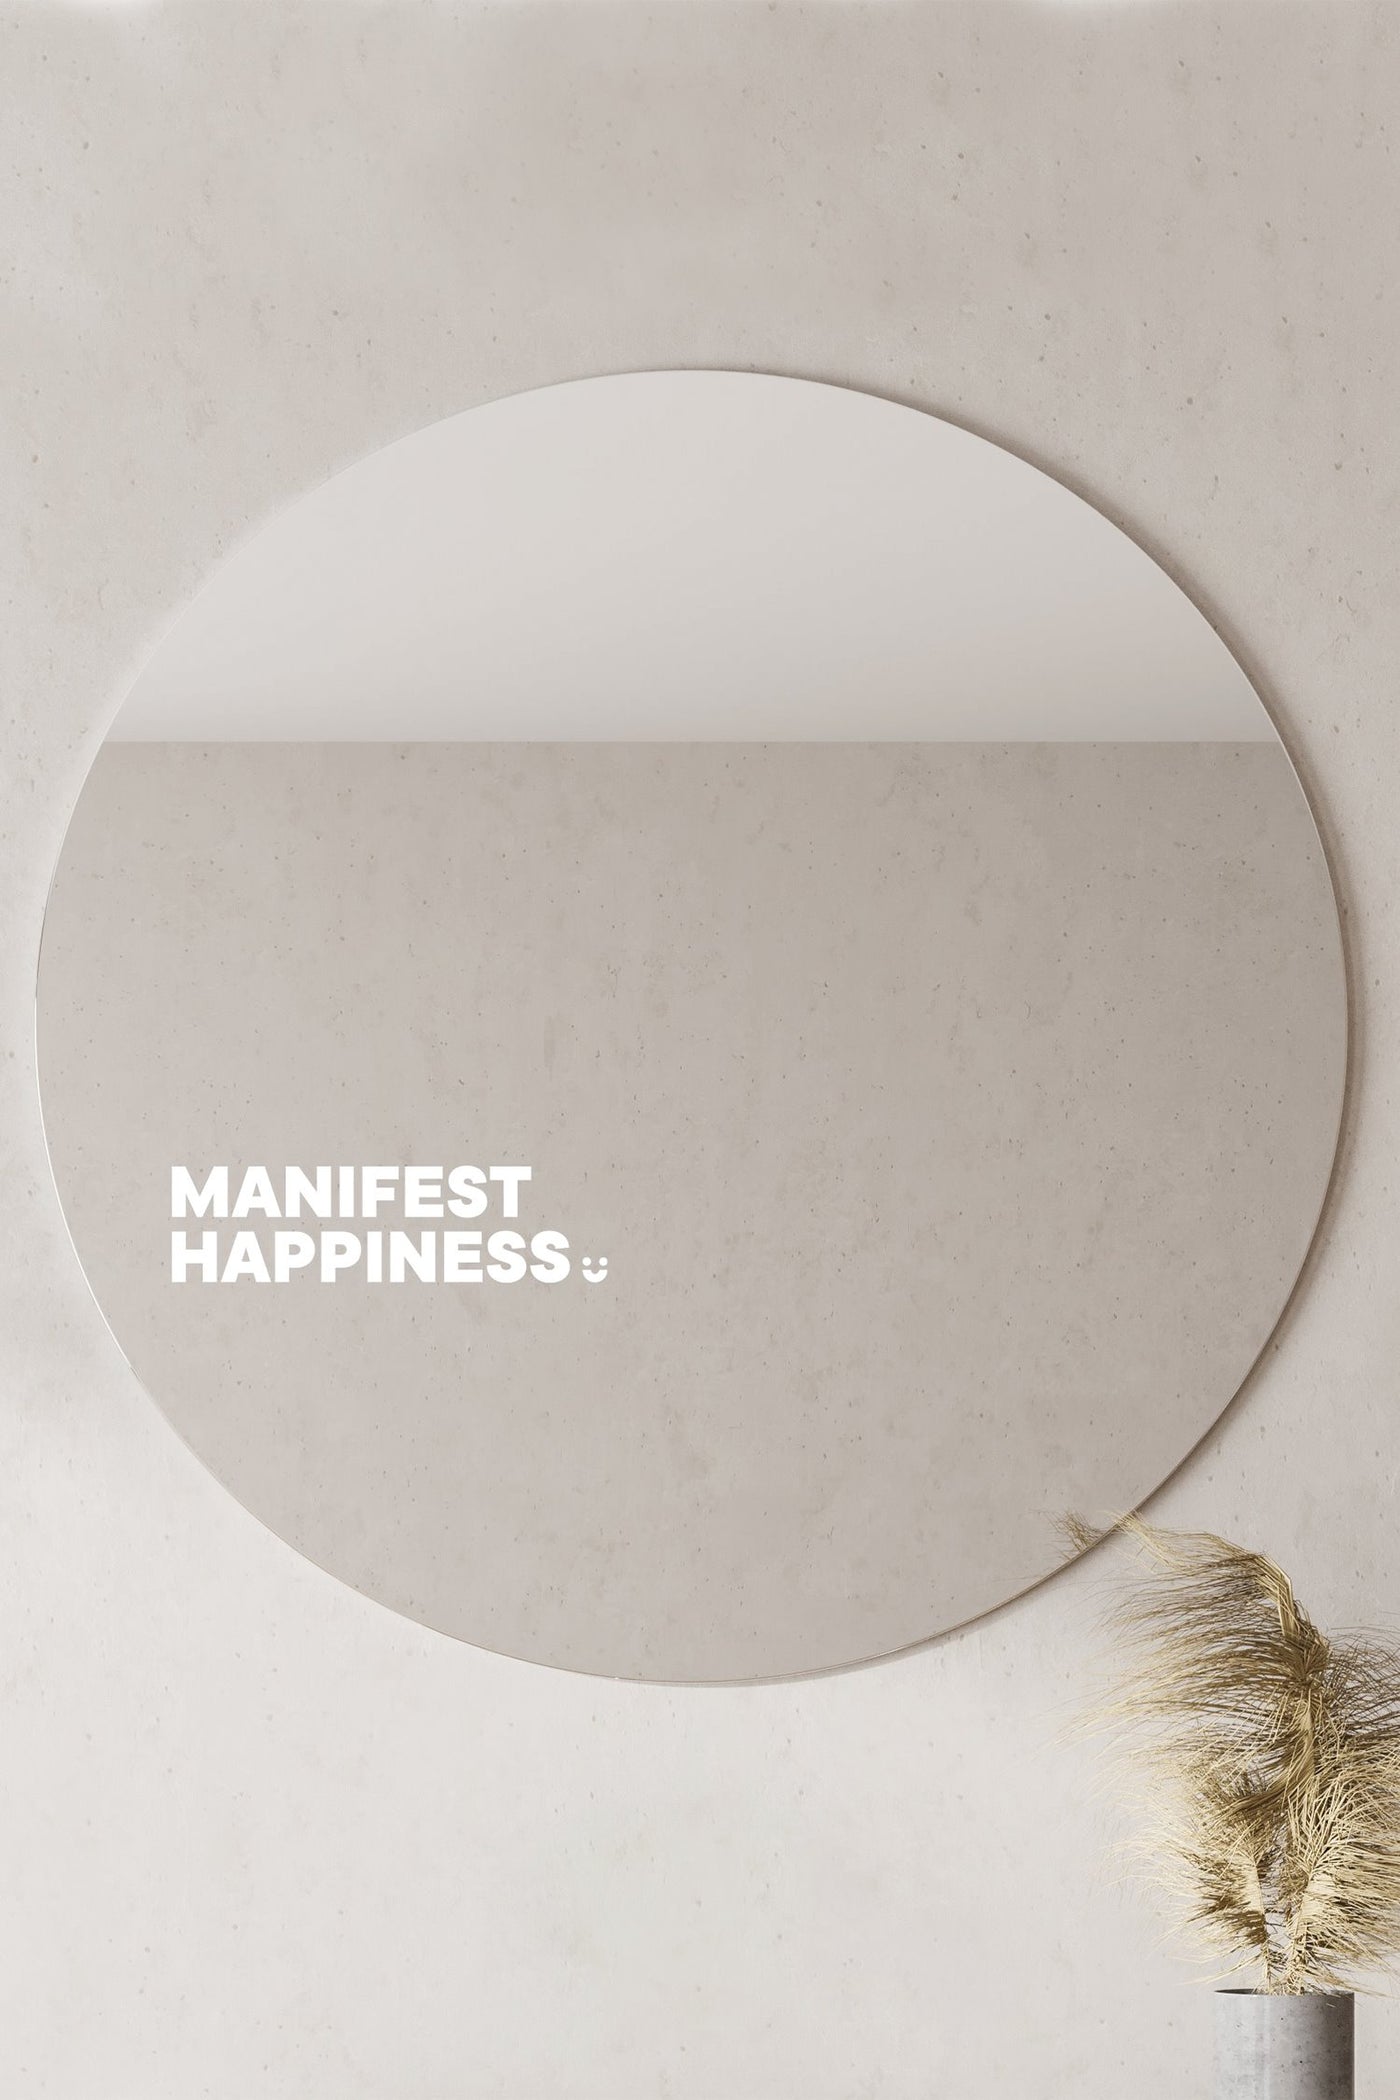 MANIFEST HAPPINESS. - Affirmation Mirror Sticker Affirmation Stickers Selfawear 